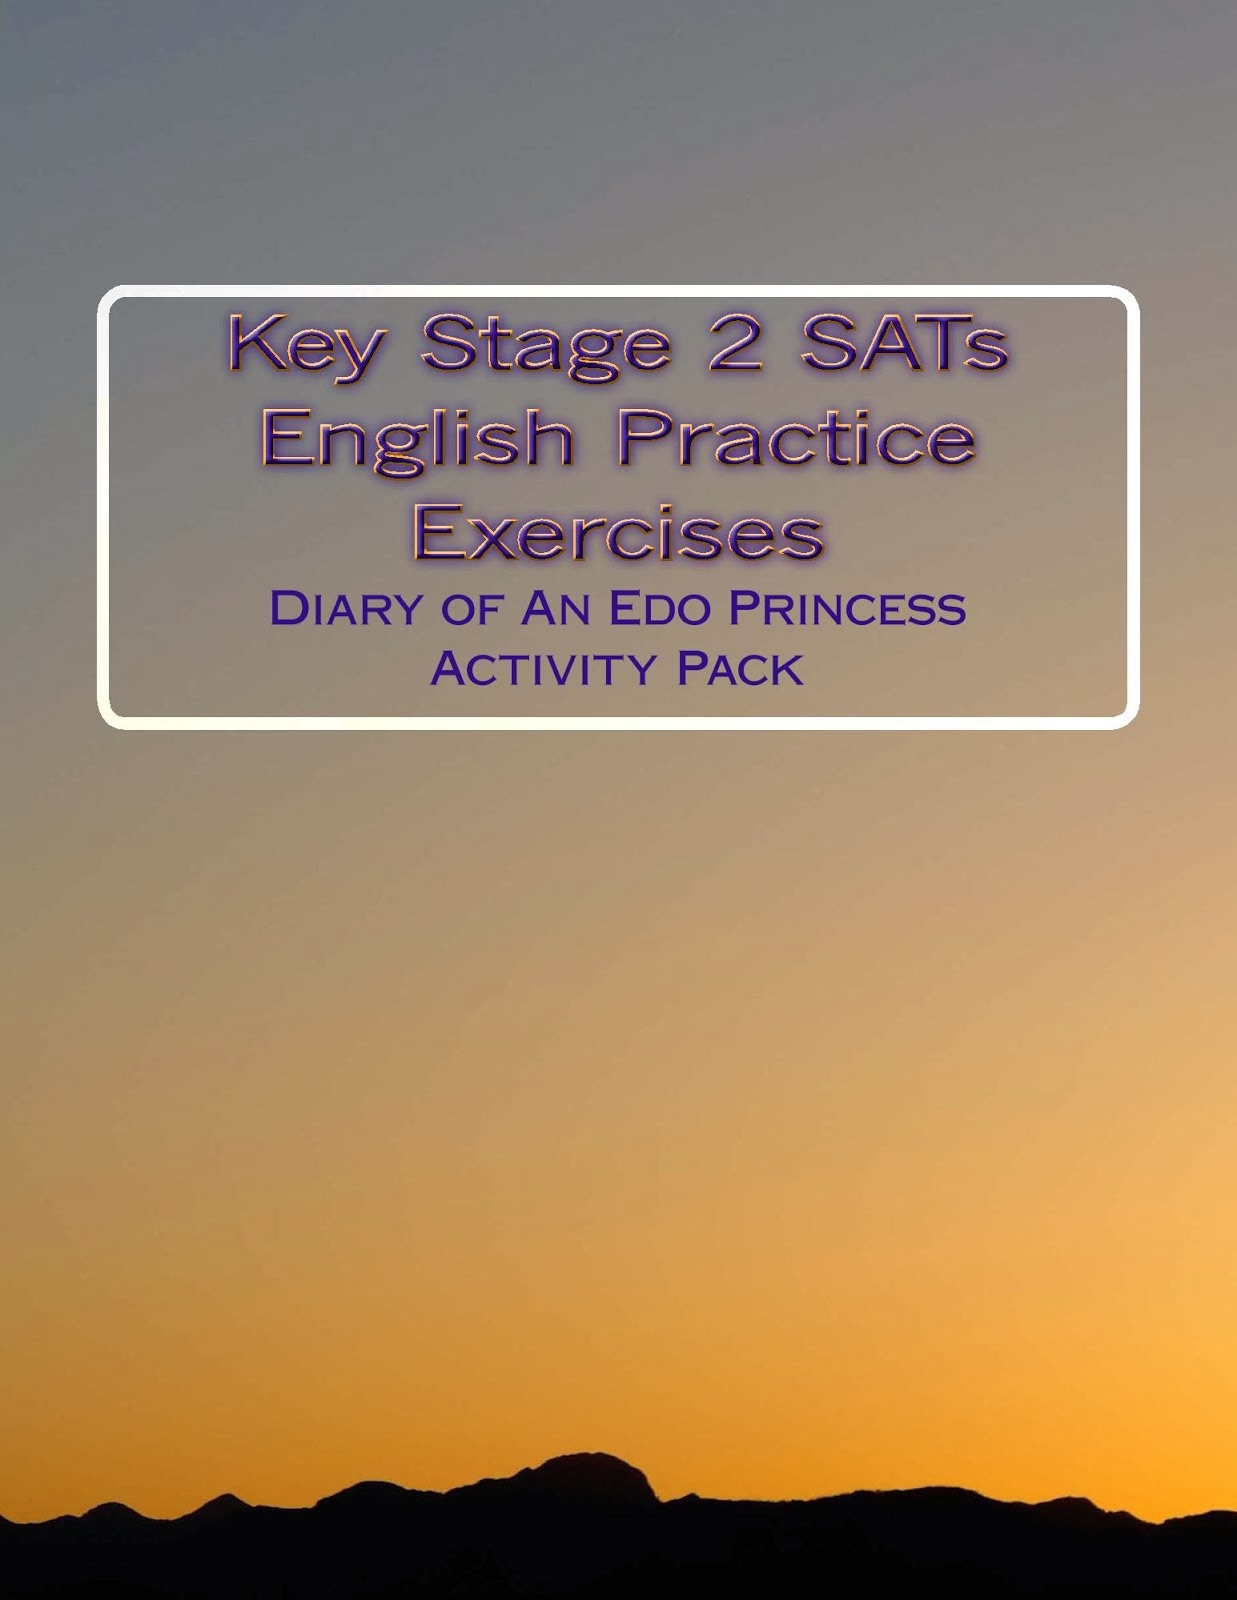 Key Stage 2 English Practice Exercises